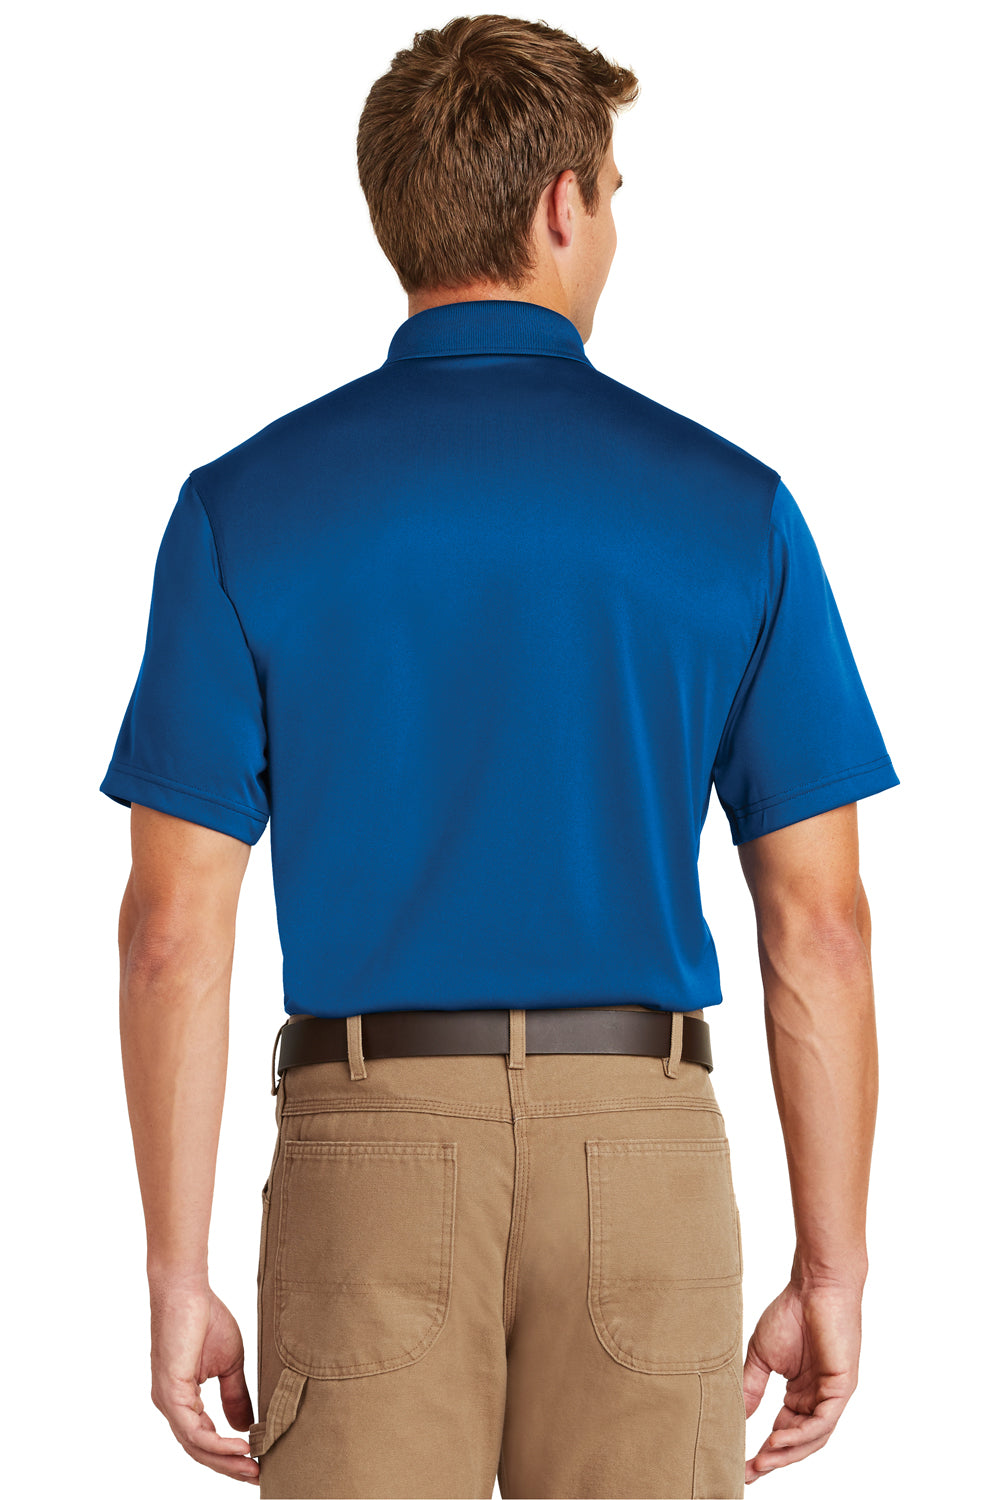 CornerStone CS412 Mens Select Moisture Wicking Short Sleeve Polo Shirt Royal Blue Back